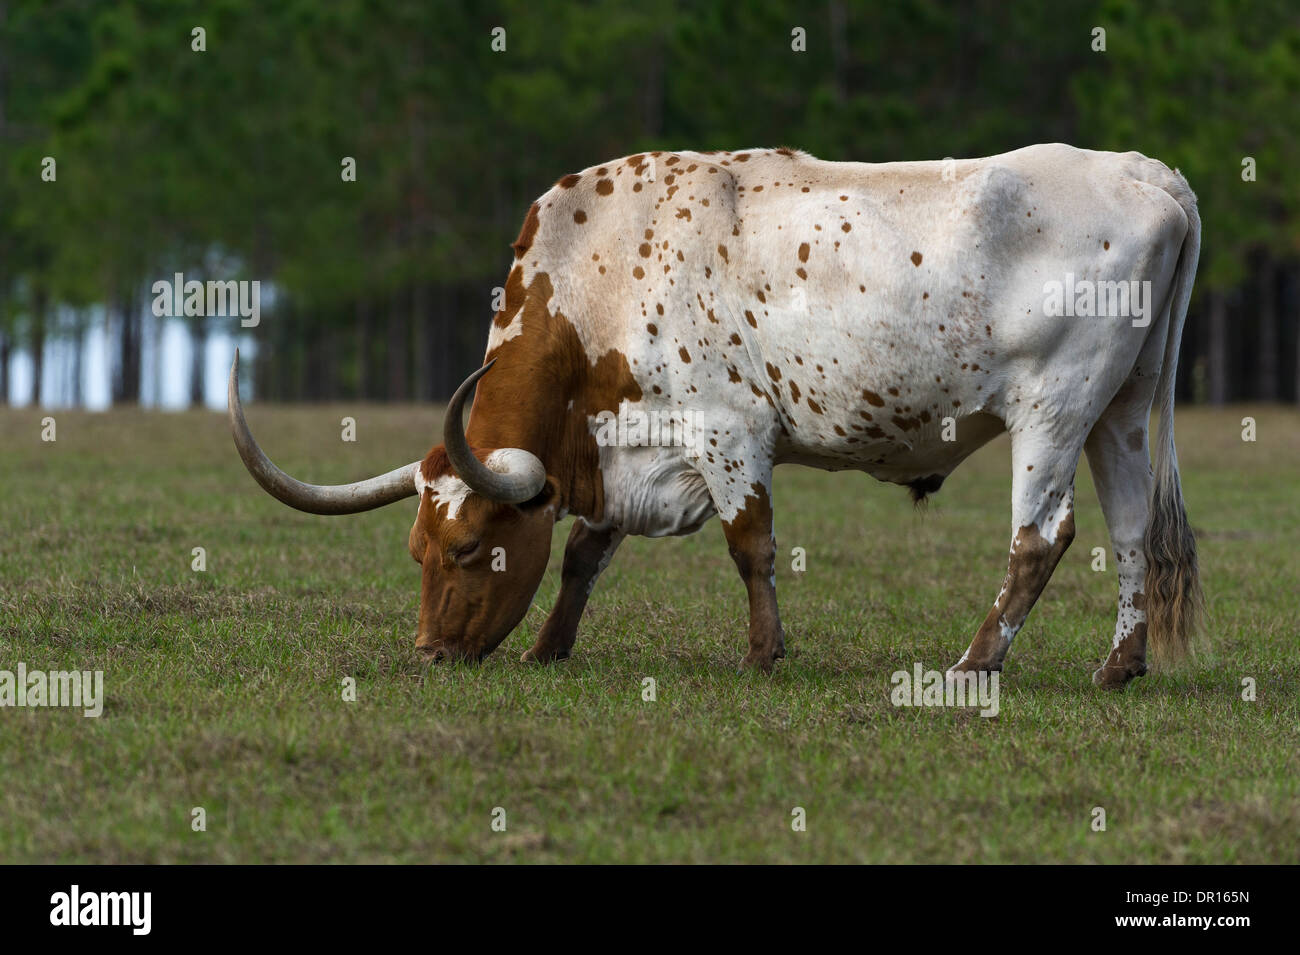 Texas Longhorn grazing Stock Photo